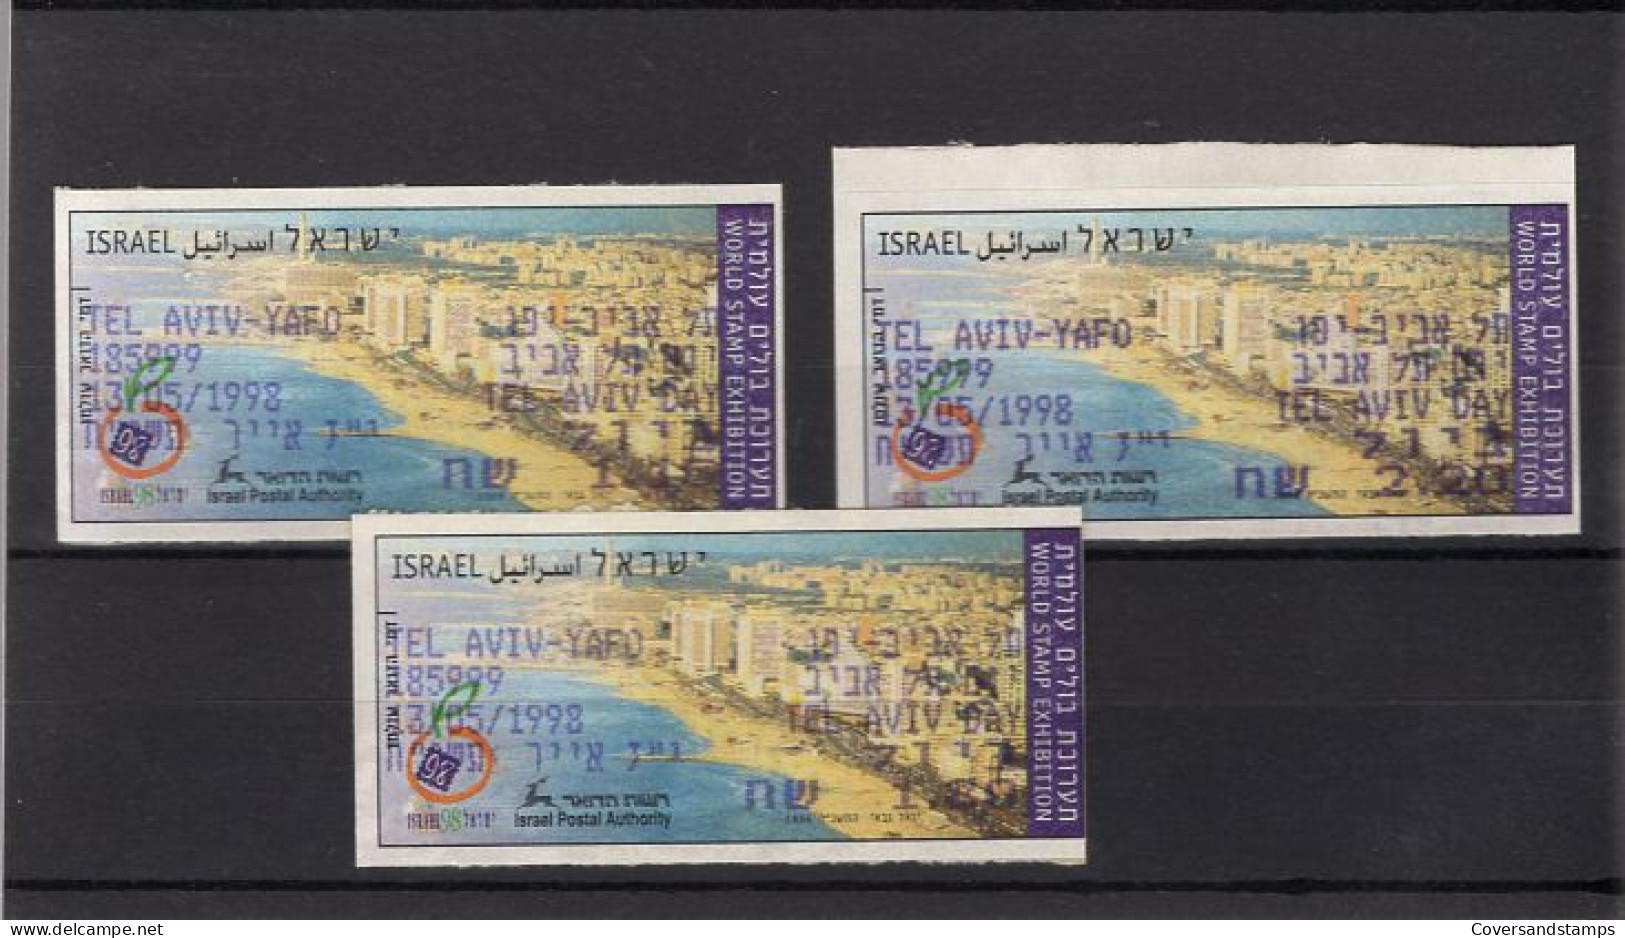  Israêl - World Stamp Exhibition Tel Aviv-Yafo 1998 ** MNH - Franking Labels